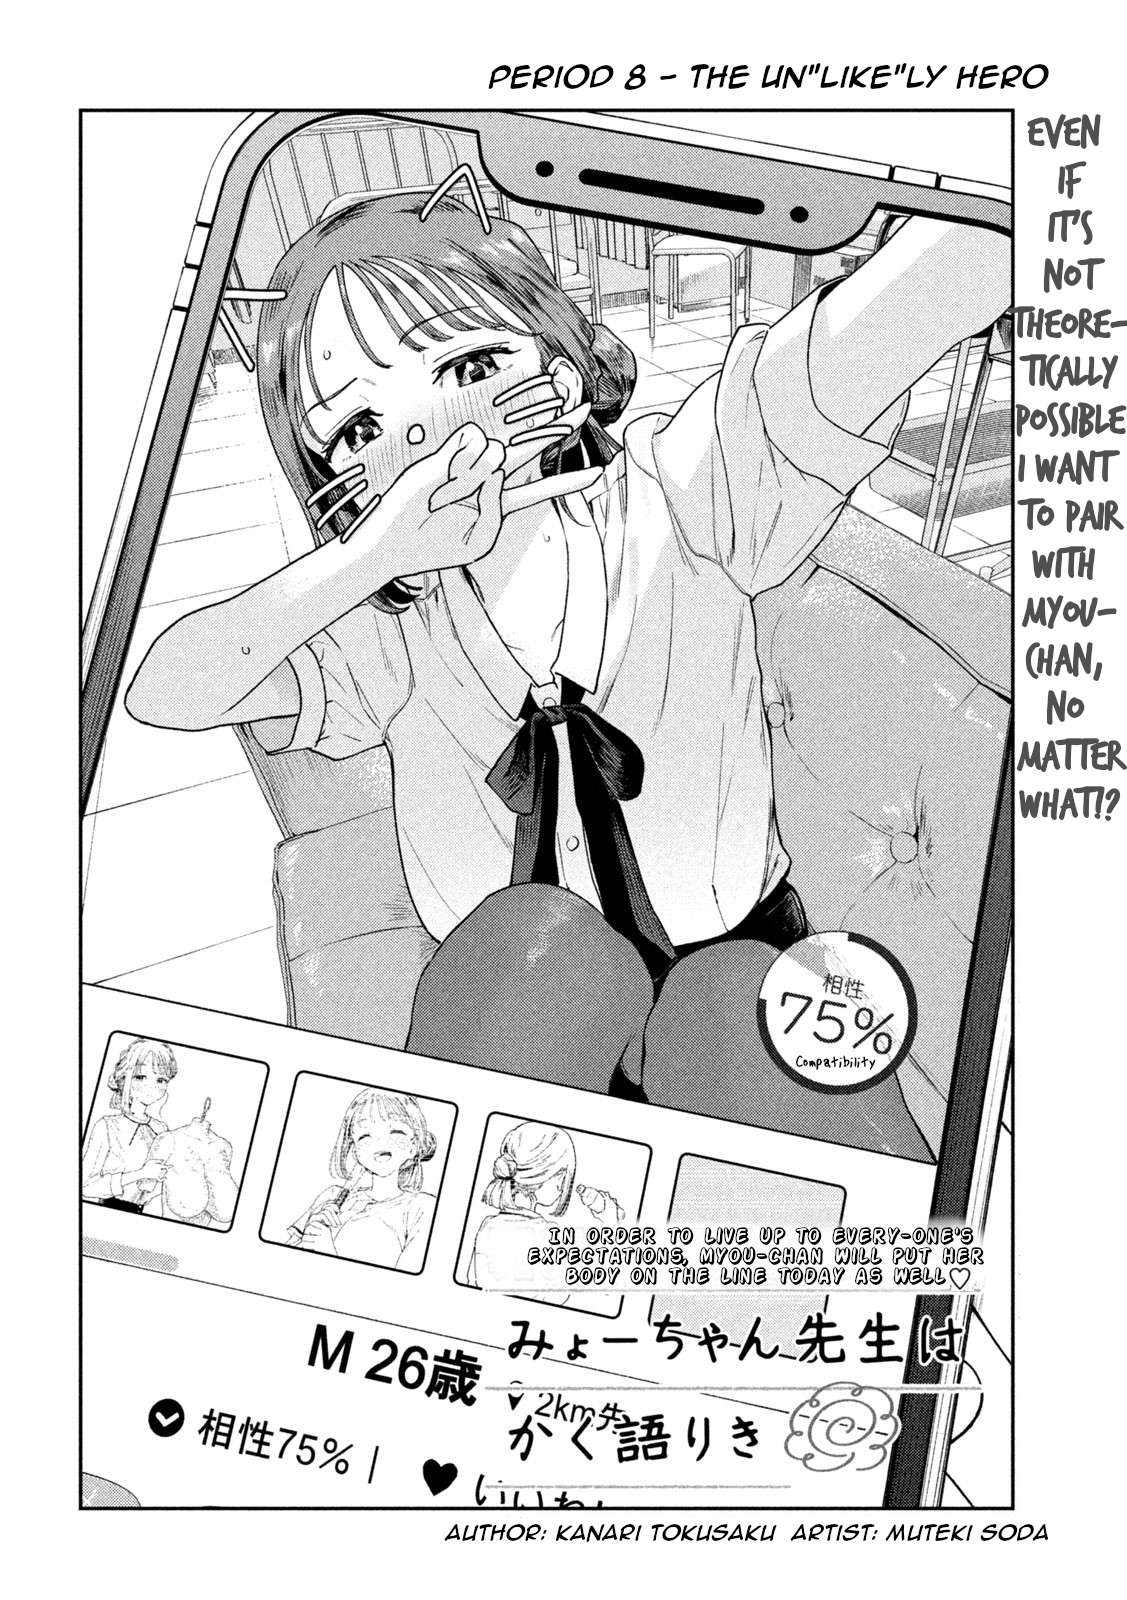 Miyo-Chan Sensei Said So - chapter 8 - #2